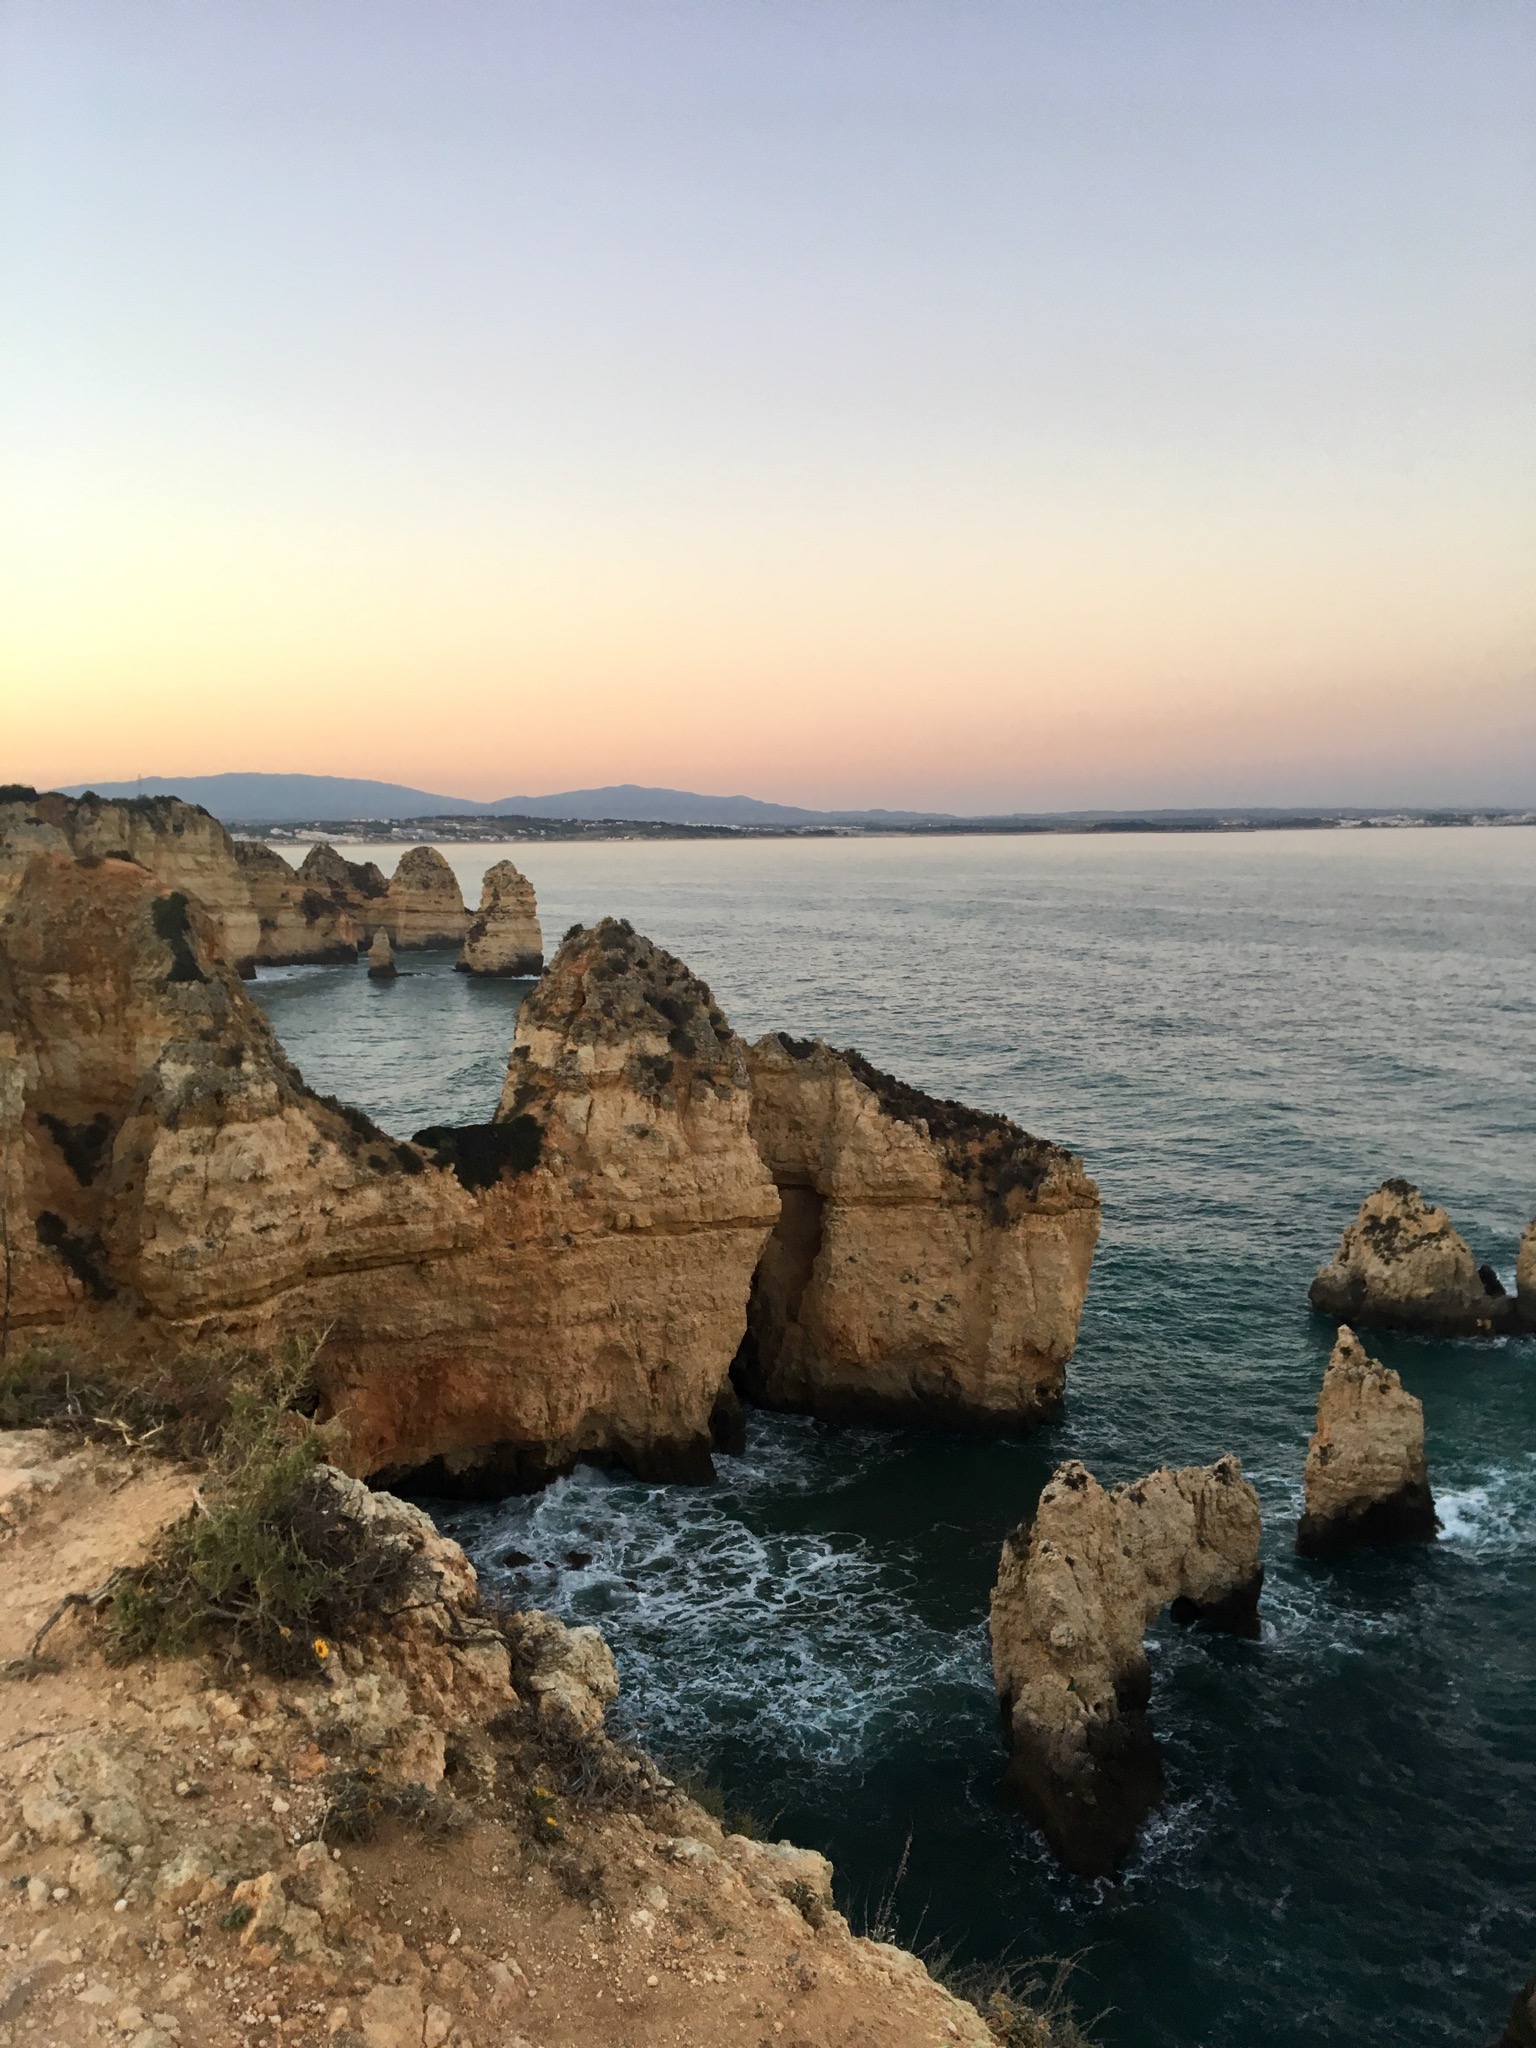 30. "Sonnenuntergangsträume an der Algarve"